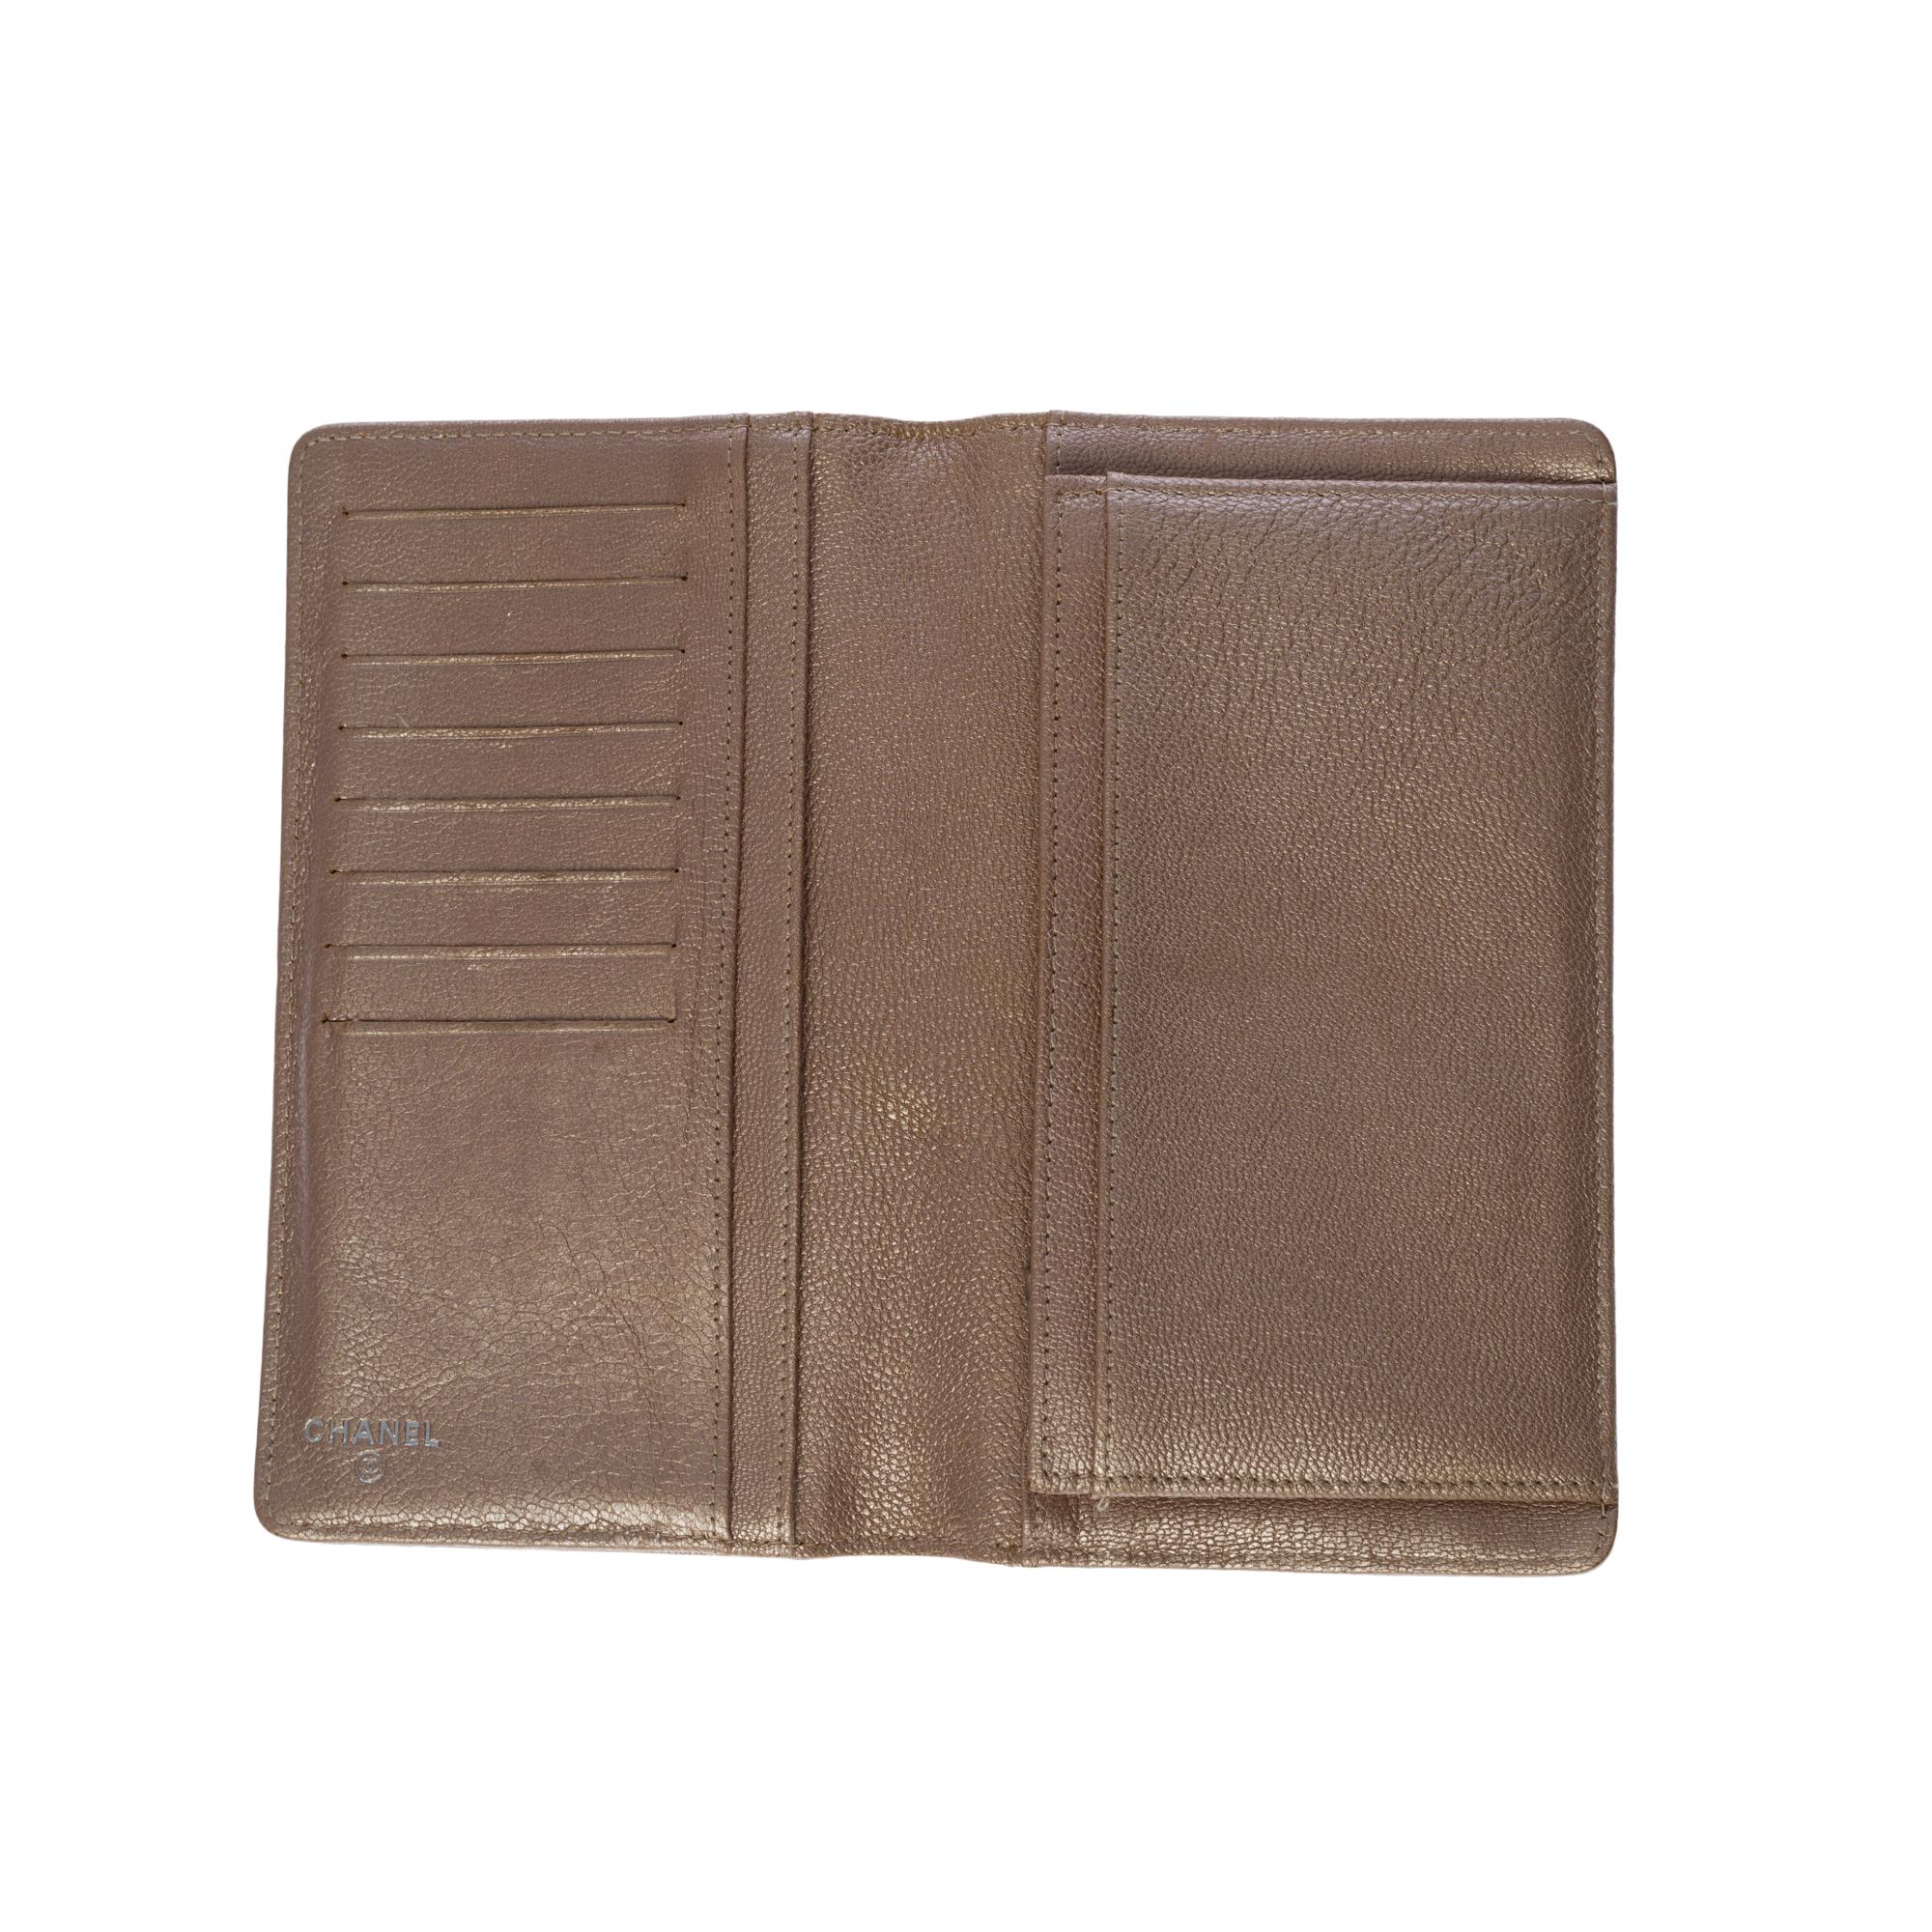 chanel metallic wallet